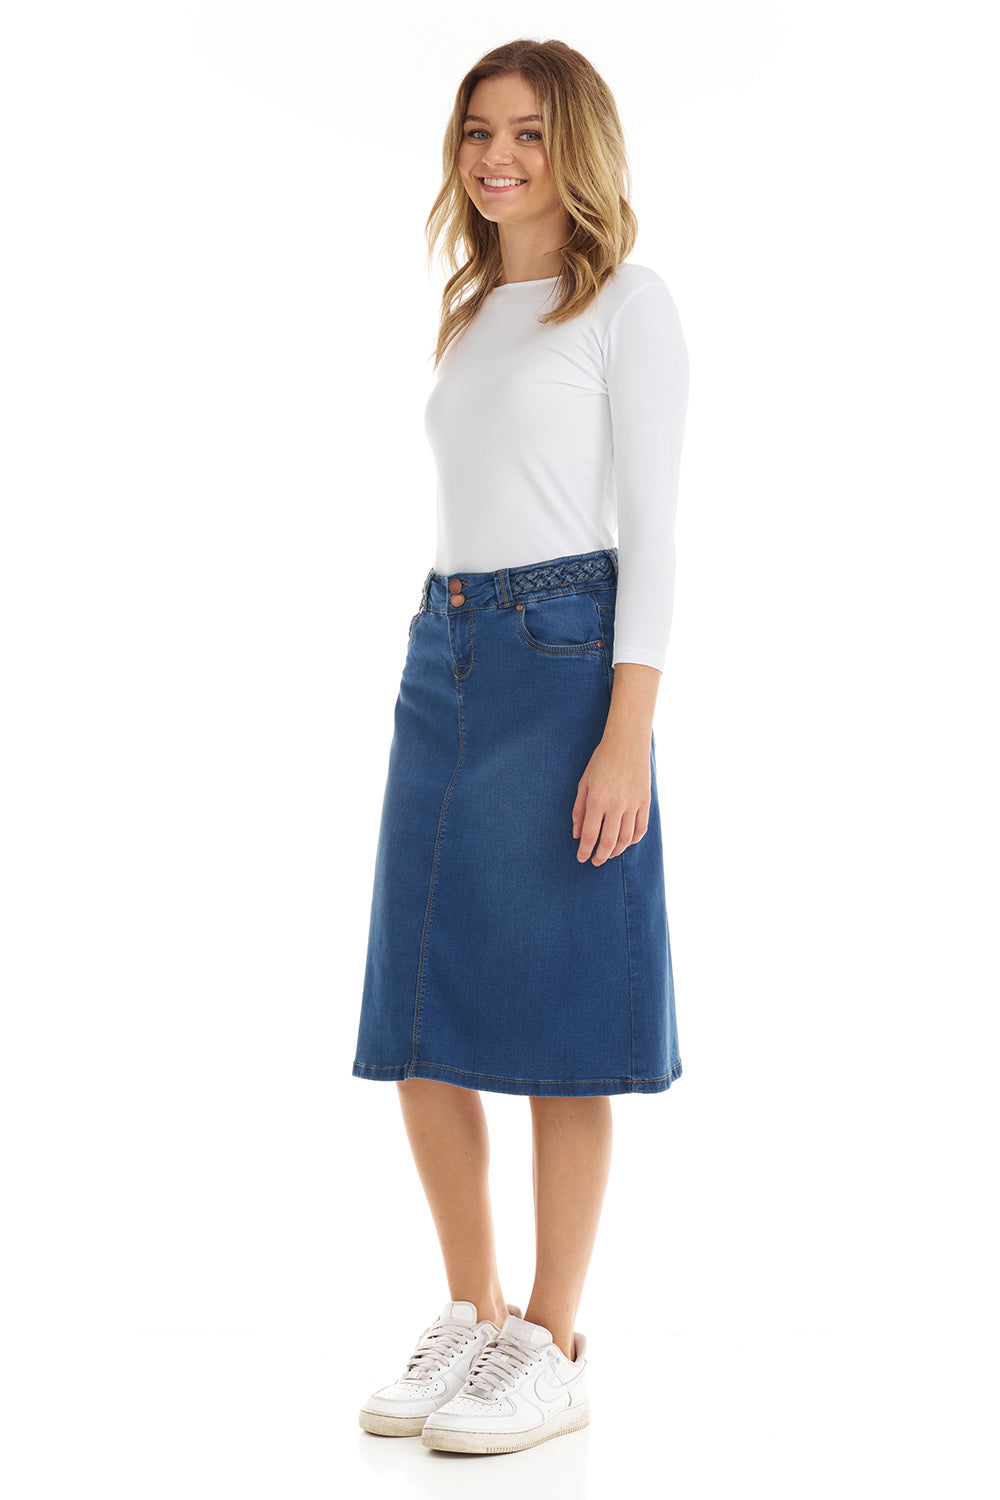 Esteez SYDNEY Denim Skirt - Modest Below the Knee A-line Jean Skirt for Women - VINTAGE BLUE